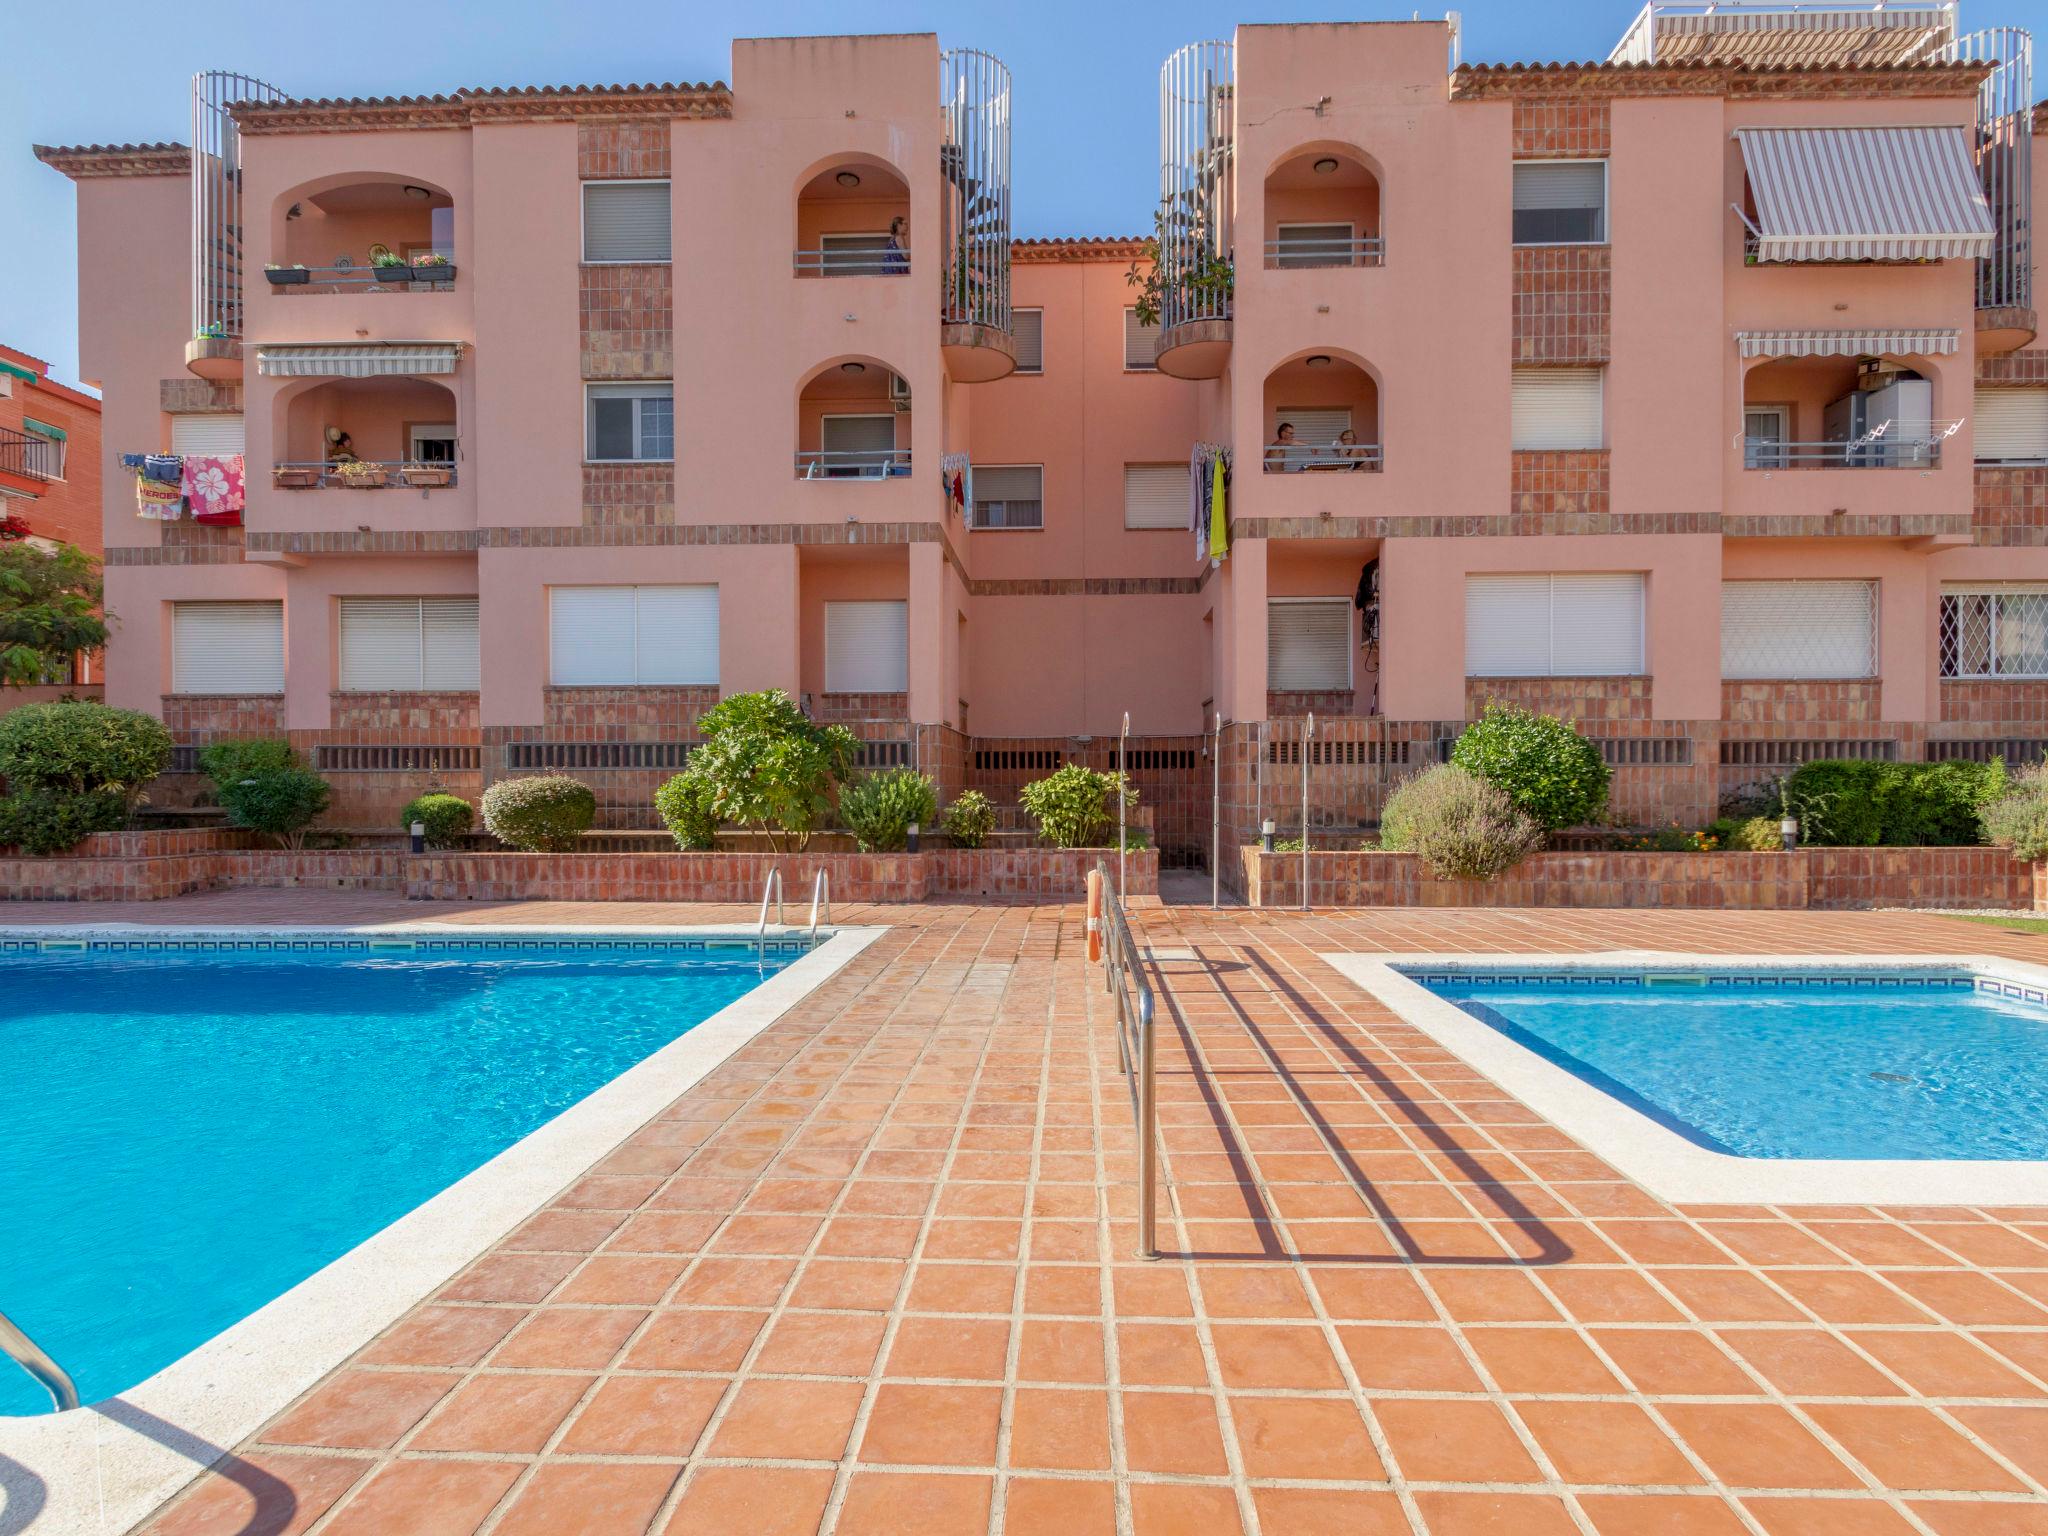 Photo 2 - Appartement de 1 chambre à Torredembarra avec piscine et vues à la mer